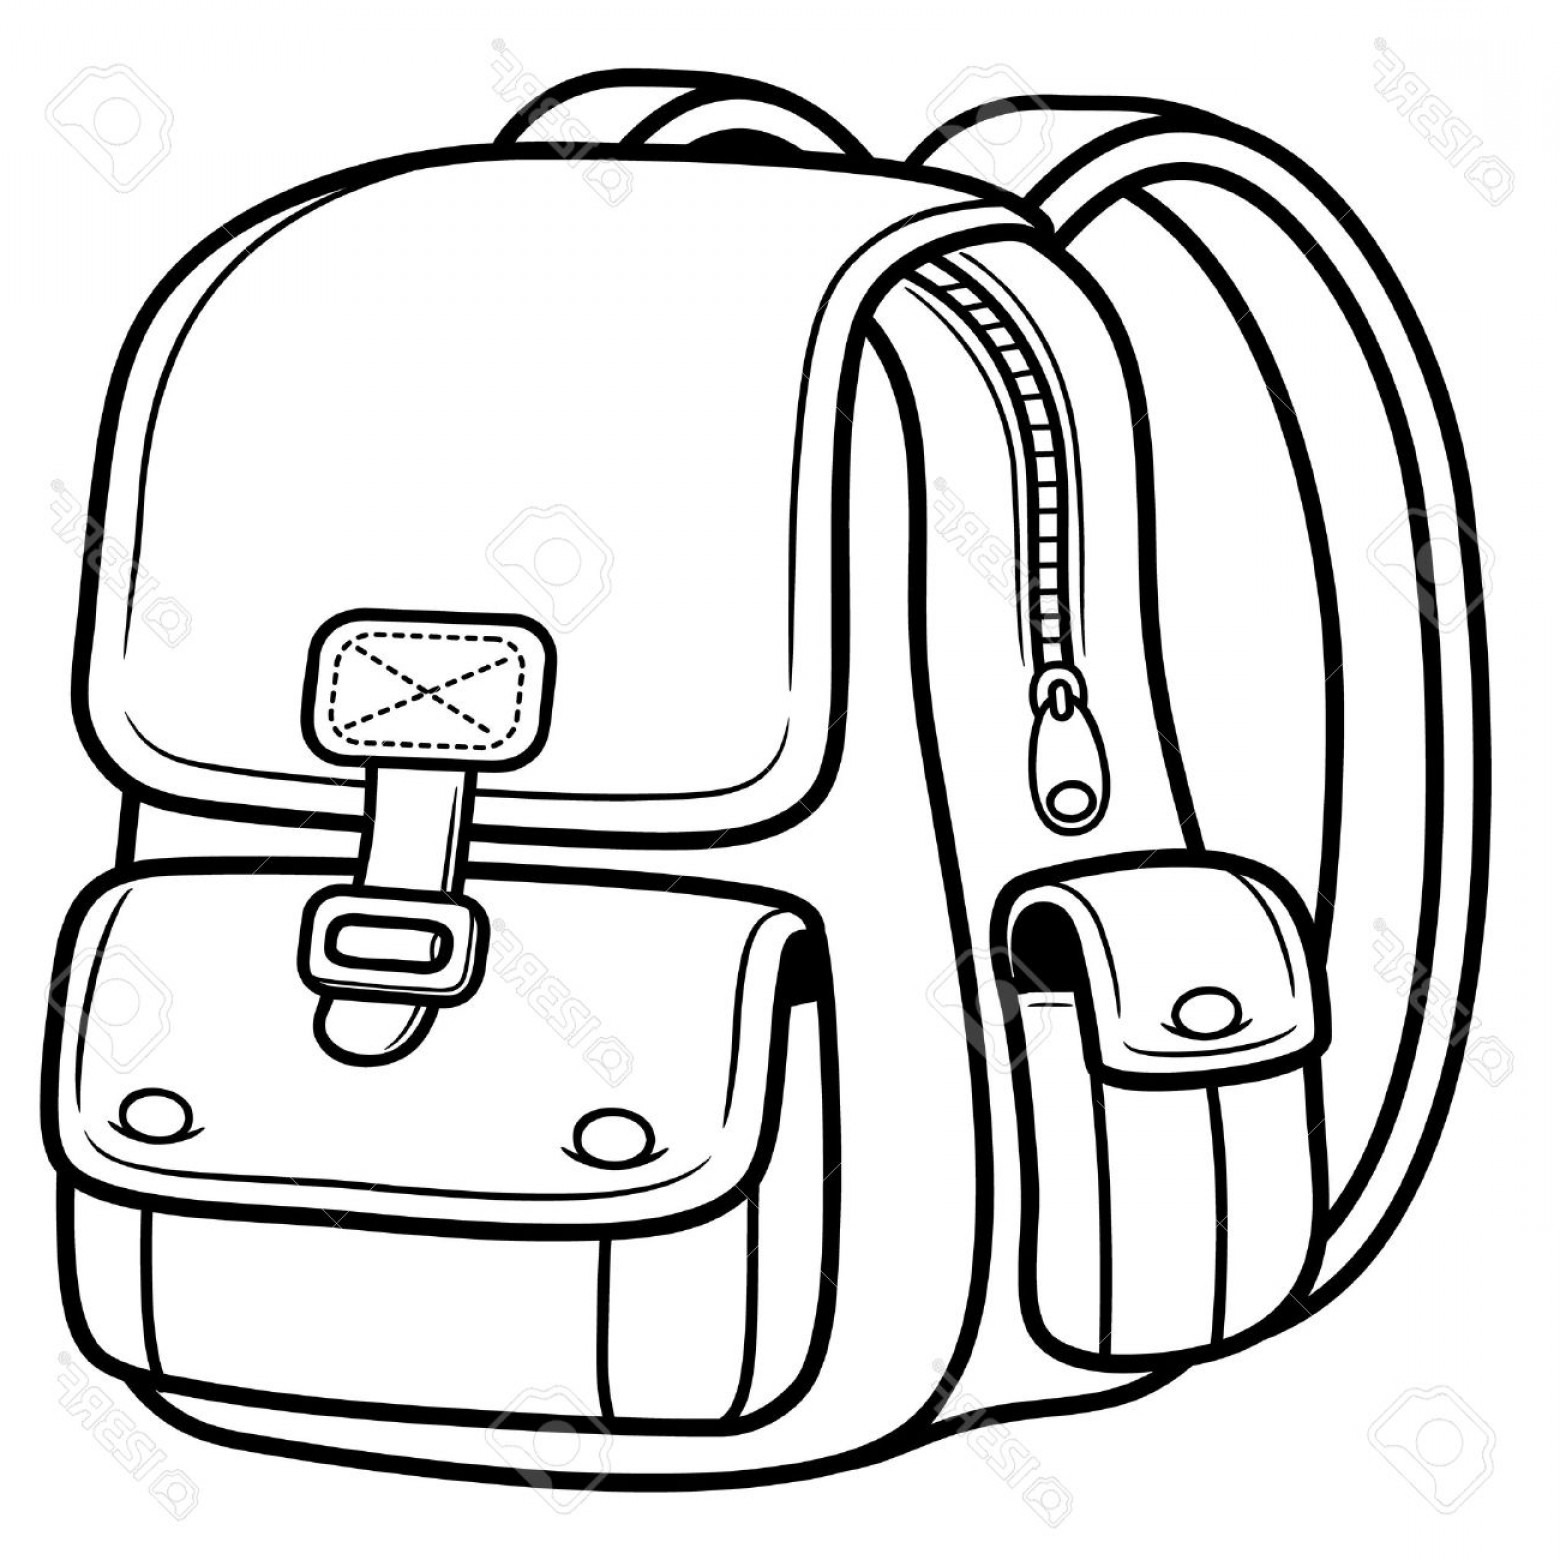 Backpack clipart line drawing. School bags at getdrawings